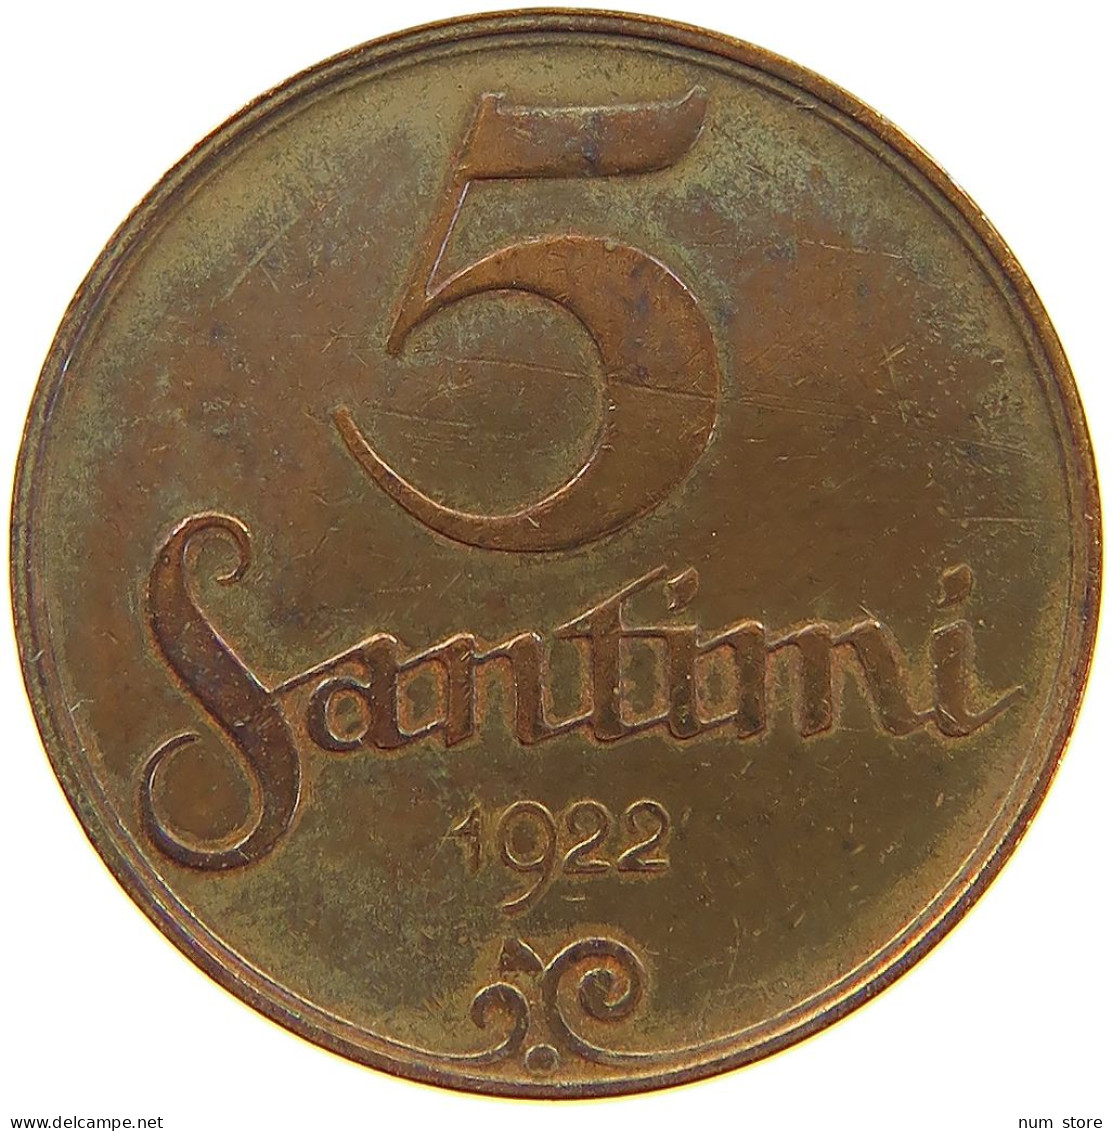 LATVIA 5 SANTIMI 1922  #a085 0387 - Latvia